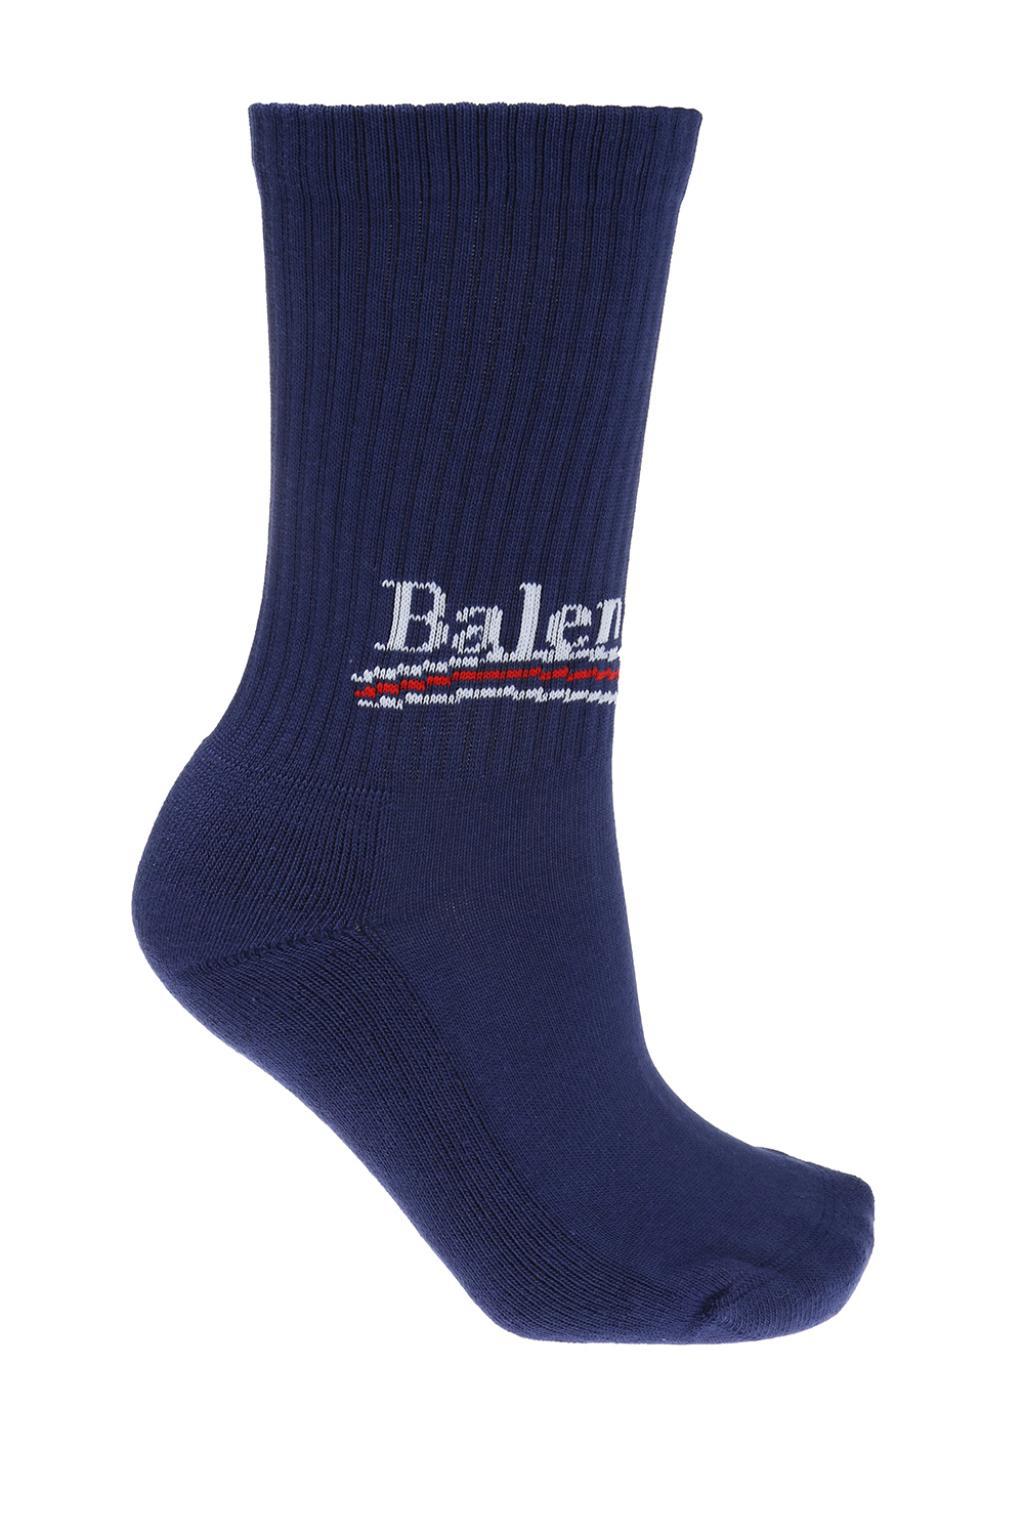 Balenciaga Cotton Logo-embroidered Socks in Navy Blue (Blue) - Save 4% ...